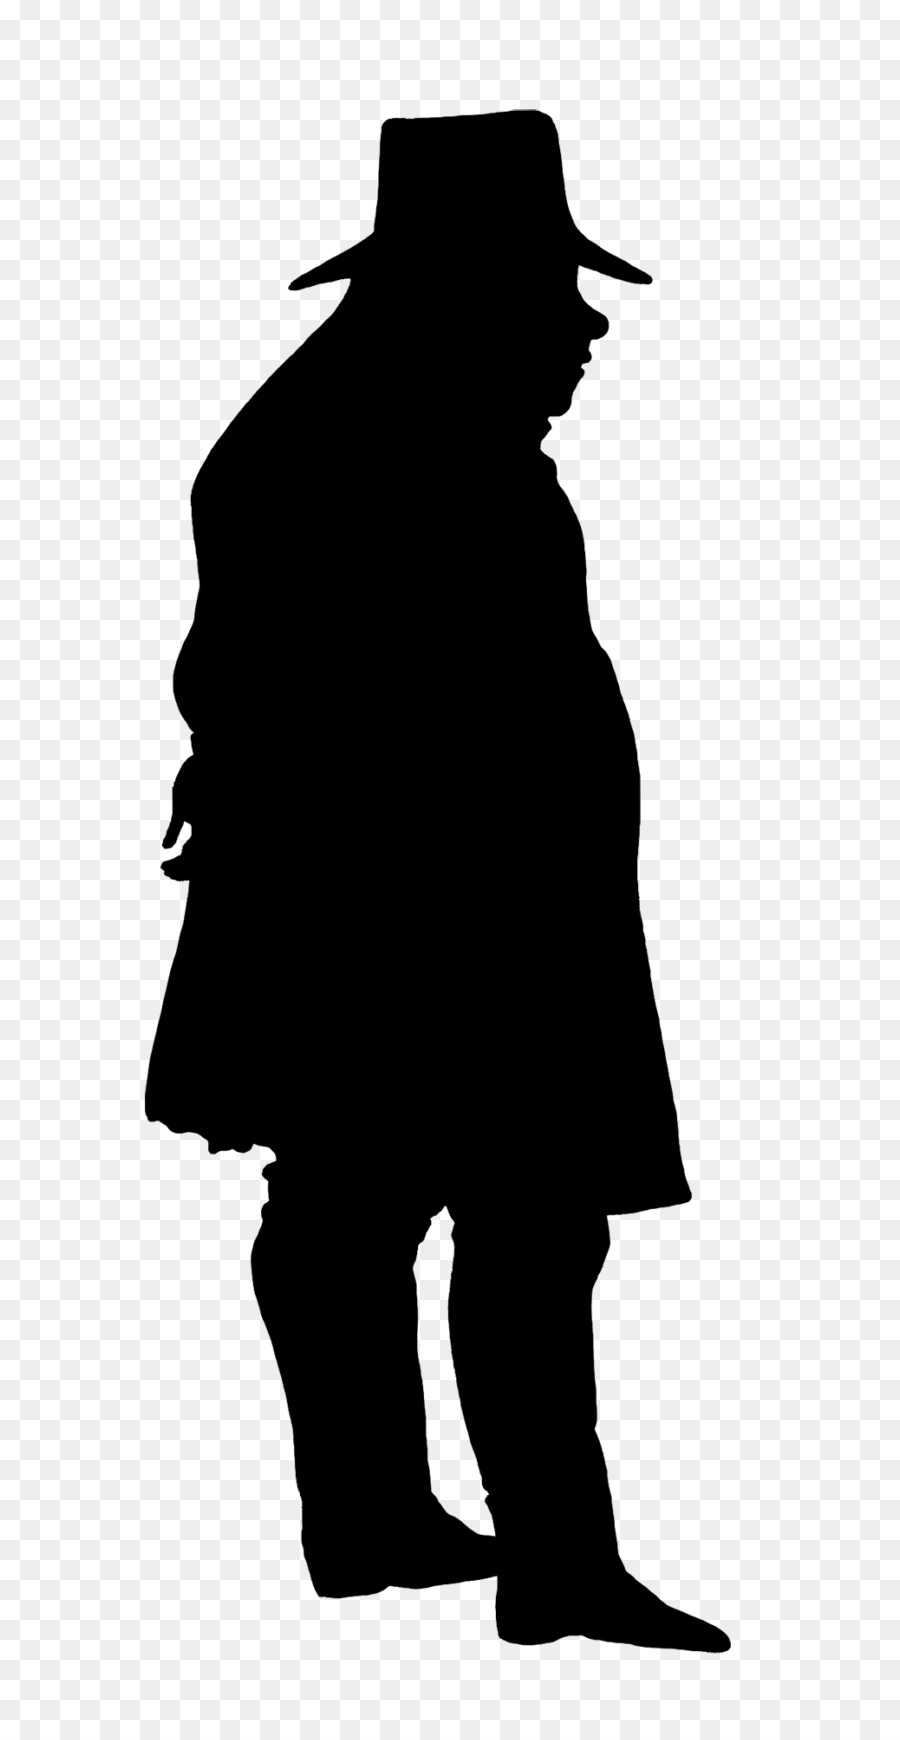 Victorian era Silhouette Gentleman Clip art - man silhouette png download - 768*1723 - Free Transparent Victorian Era png Download.